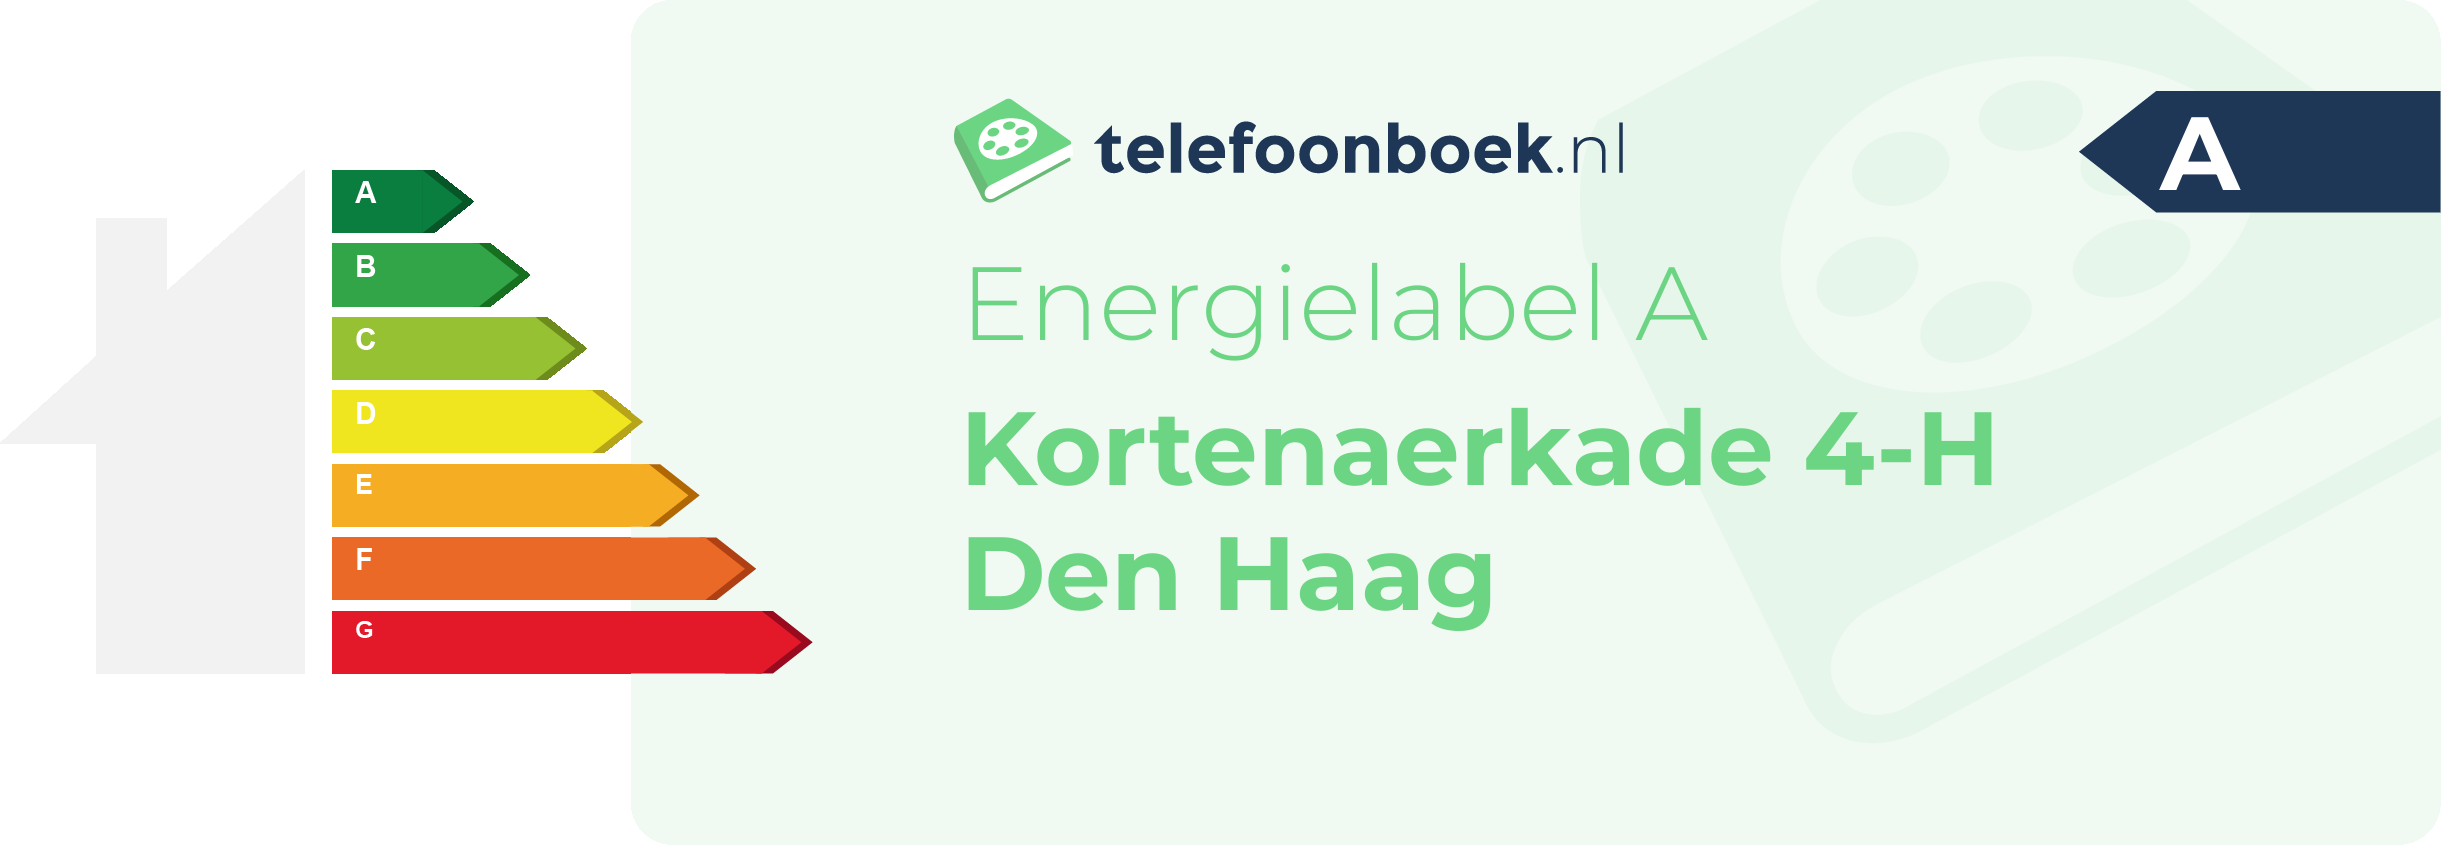 Energielabel Kortenaerkade 4-H Den Haag